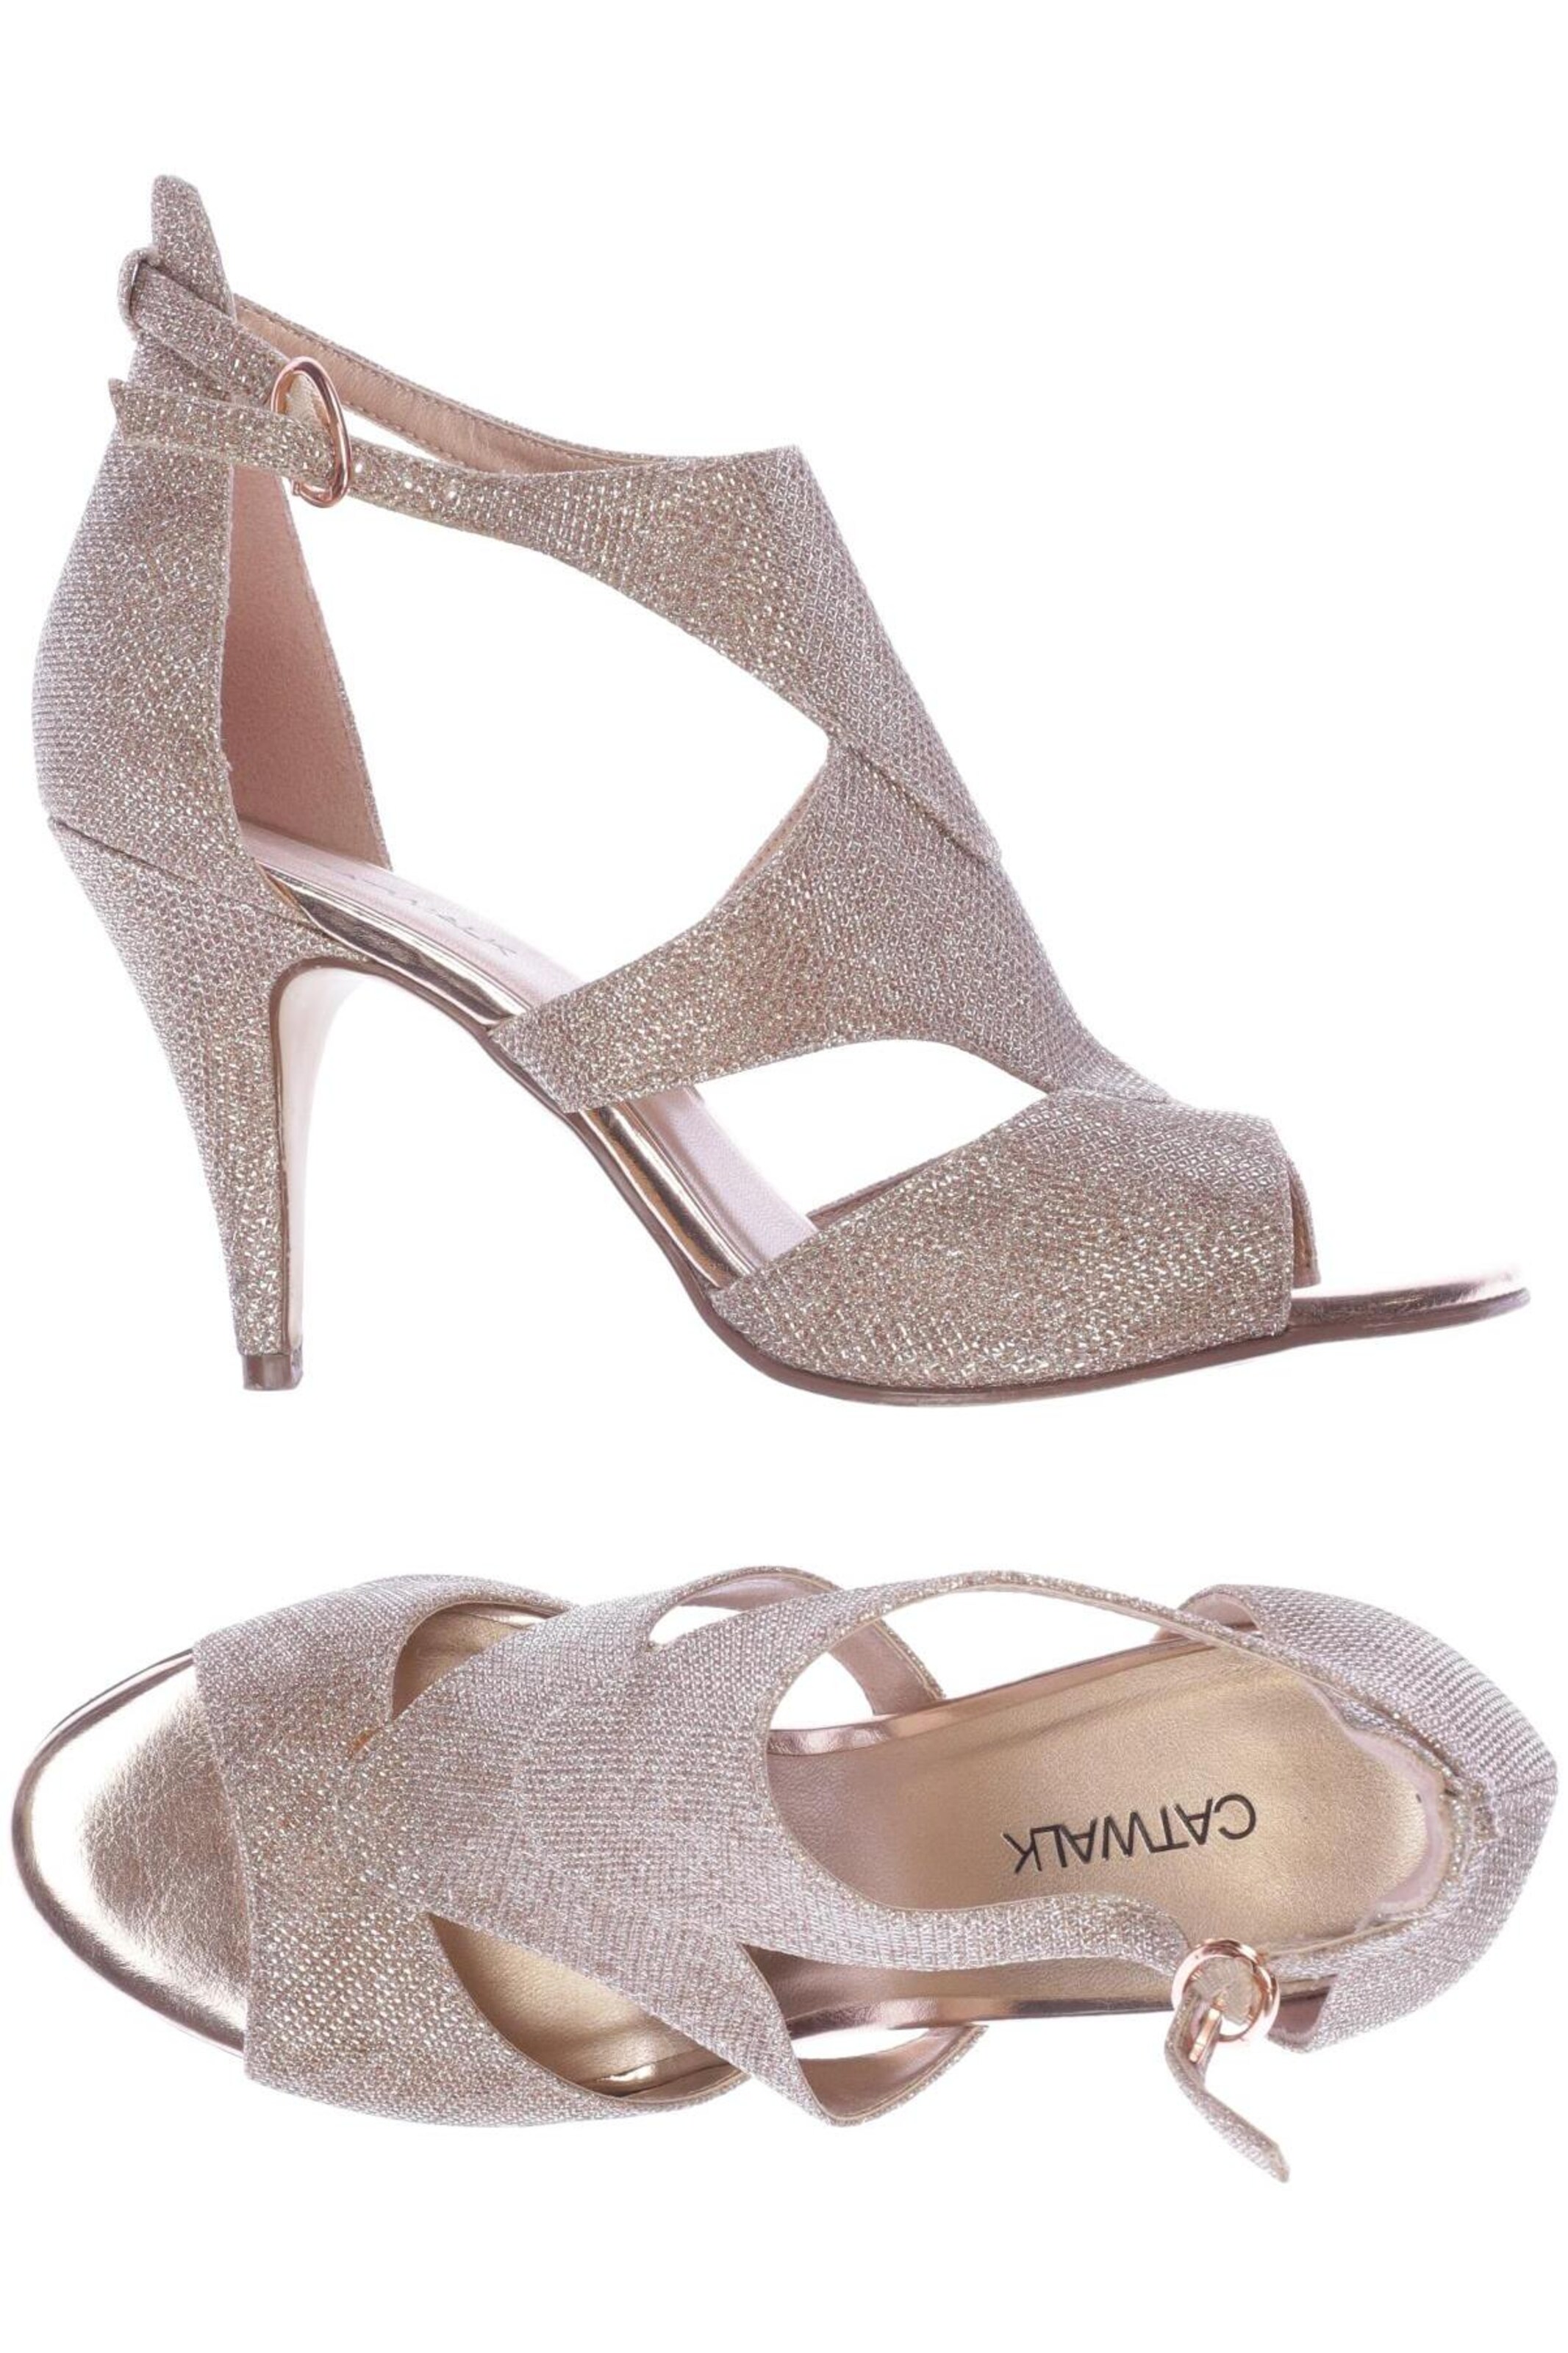 Shop Catwalk Shoes online | Lazada.com.my